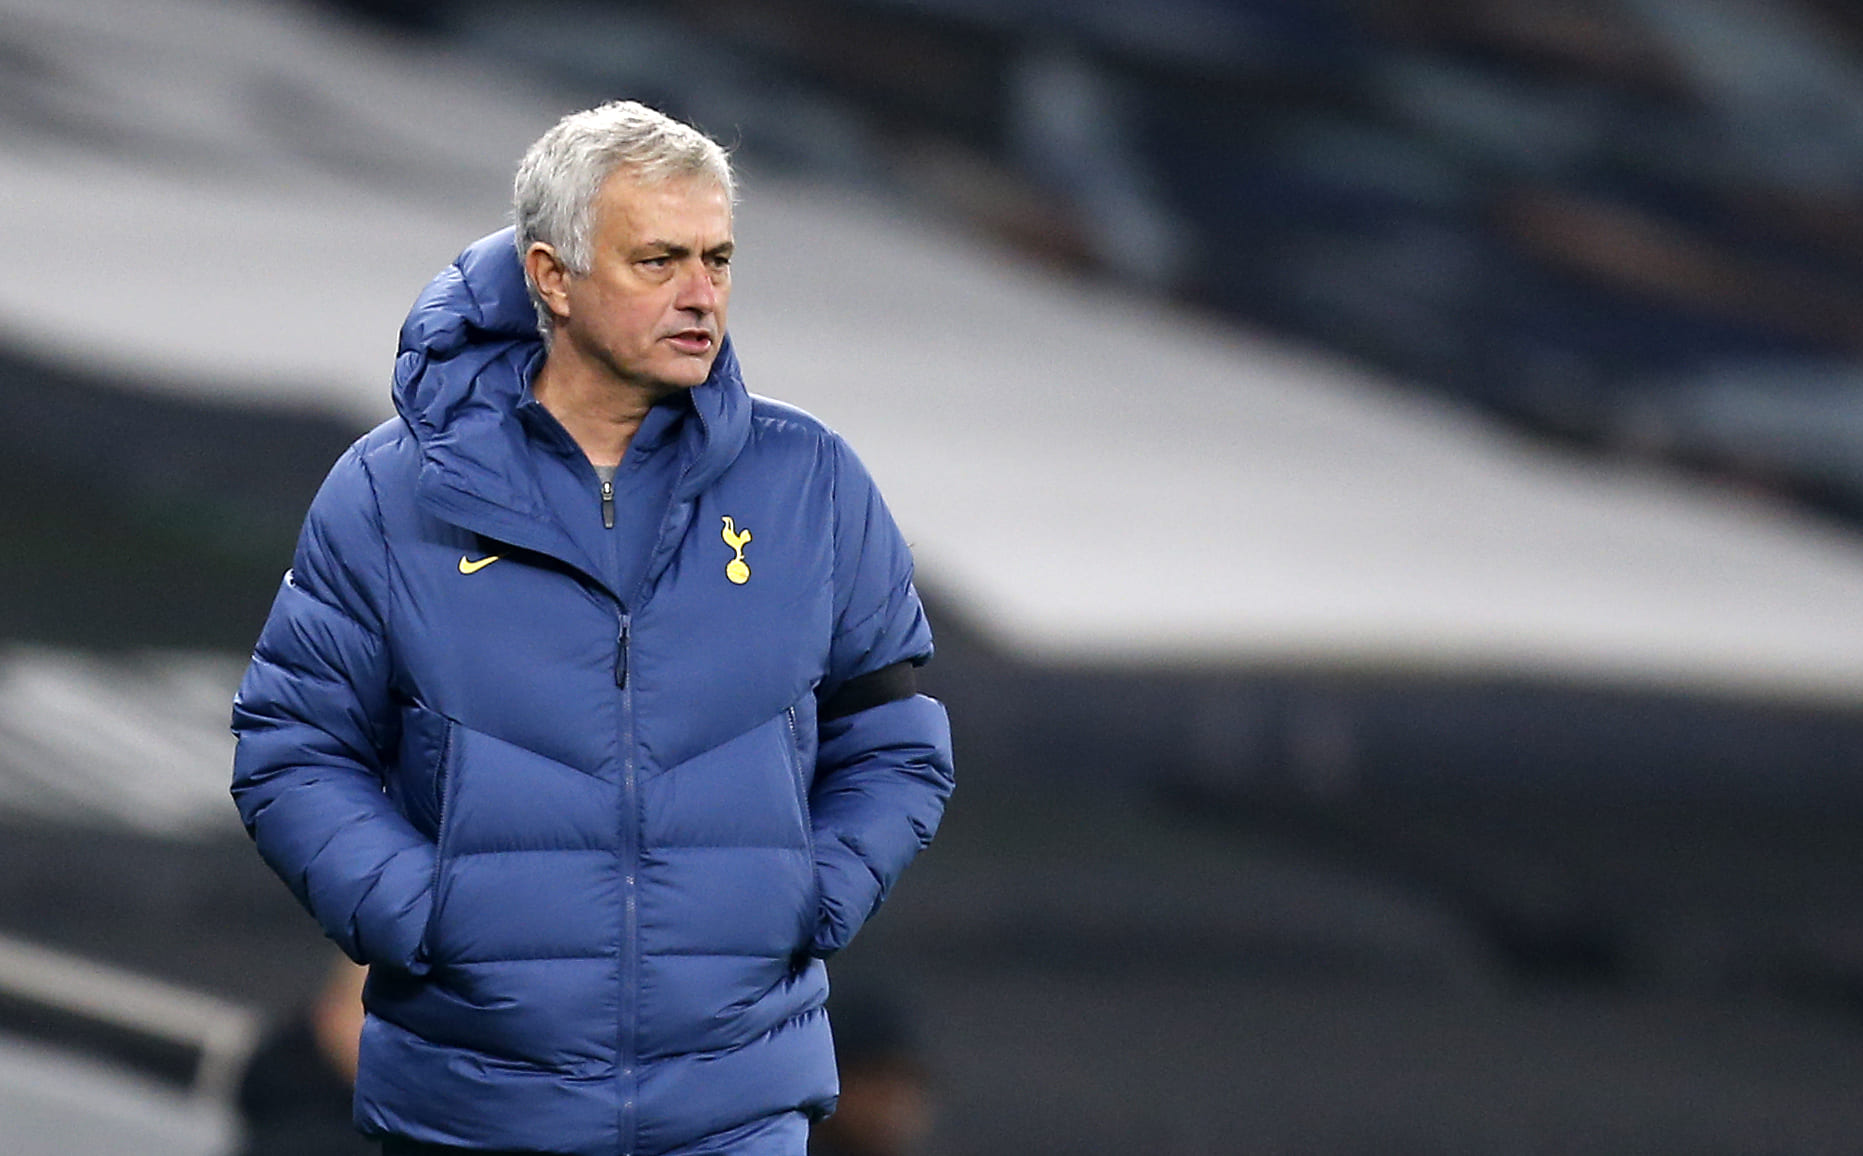 JTottenham Hotspur manager Jose Mourinho wins the Manager of the Month for November